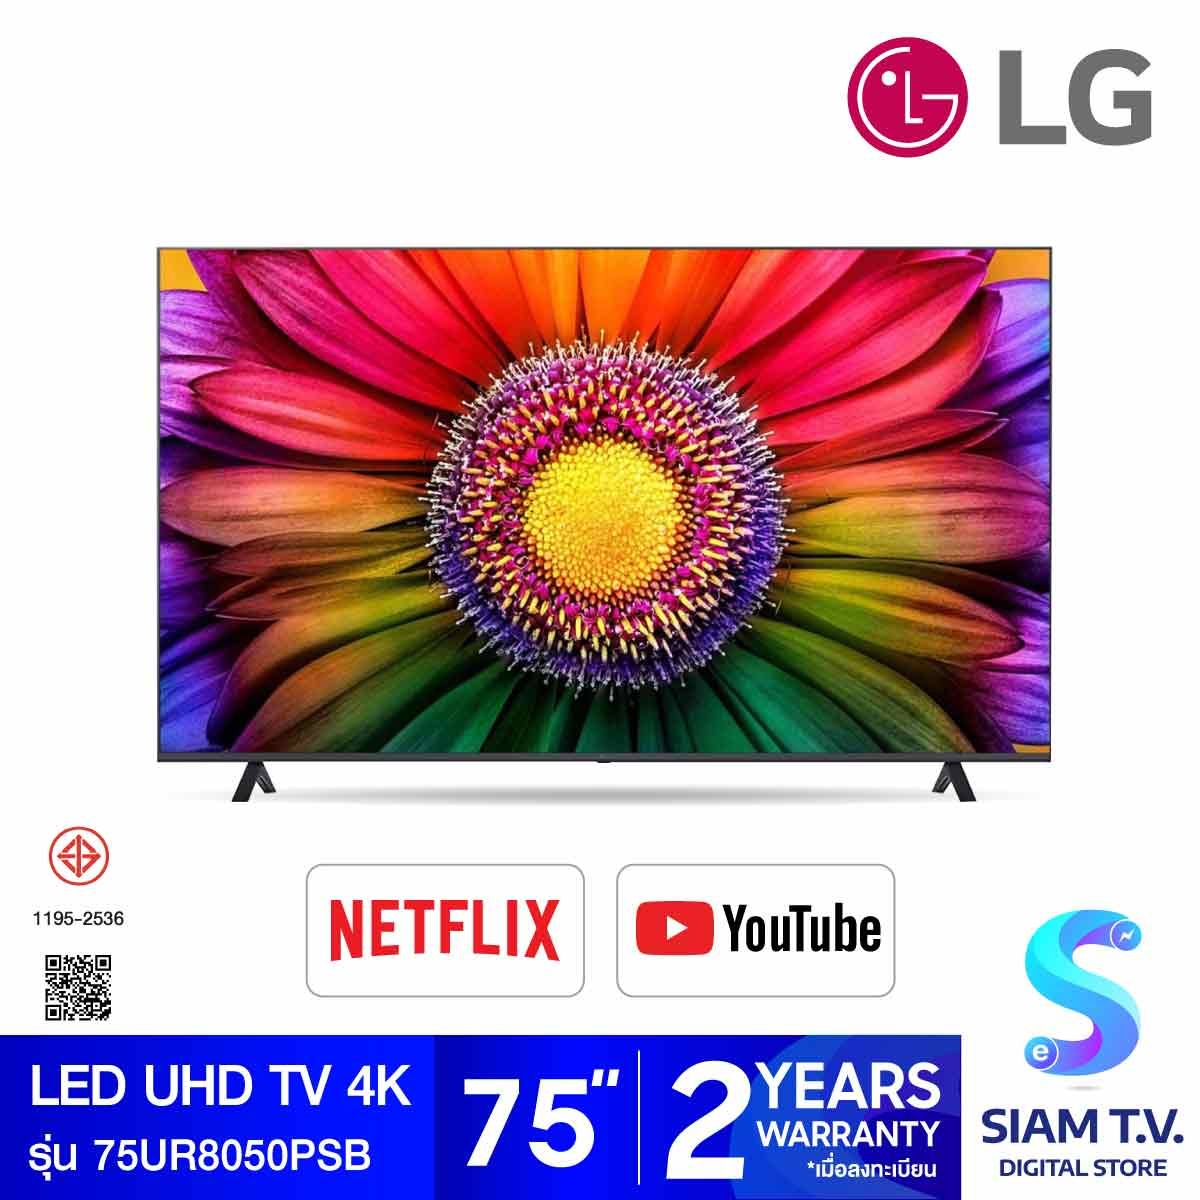 LG LED UHD TV 4K รุ่น 75UR8050PSB สมาร์ททีวี 4K ขนาด 75 นิ้ว ปี 2023 LG ThinQ AI